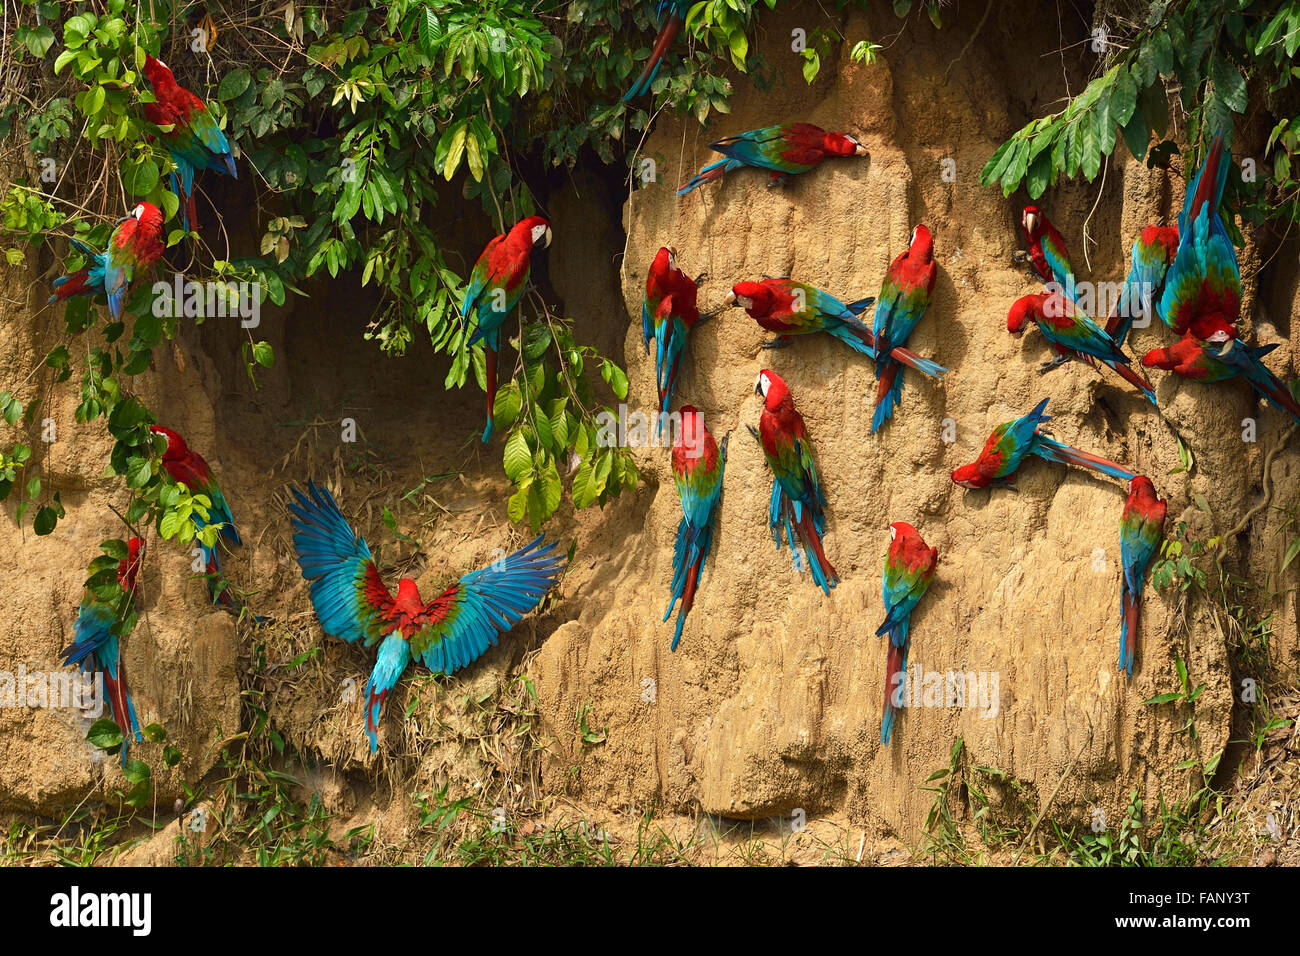 Red-and-green macaw (Ara chloroptera), colony on clay bank, Manu National Park, Peru Stock Photo